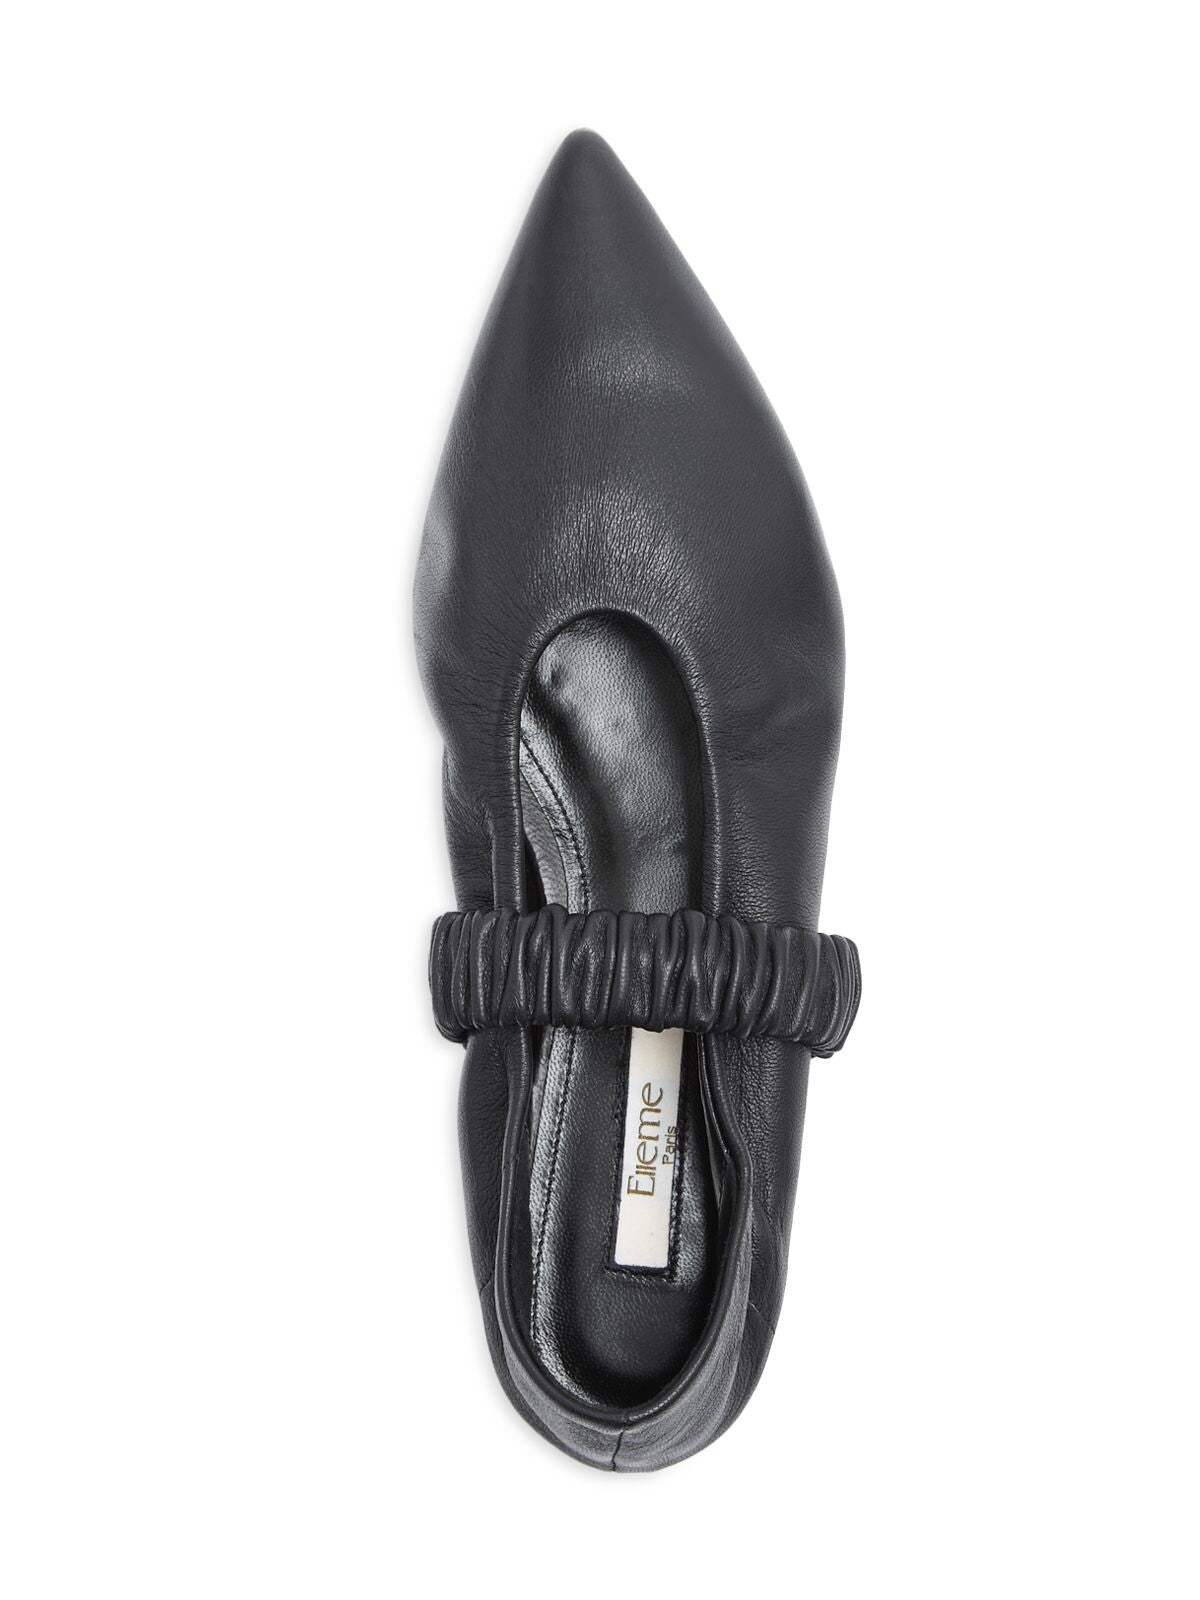 ELLEME Womens Black Stretch Comfort Chouchou Ballerina Pointed Toe Block Heel Slip On Leather Ballet Flats 37.5